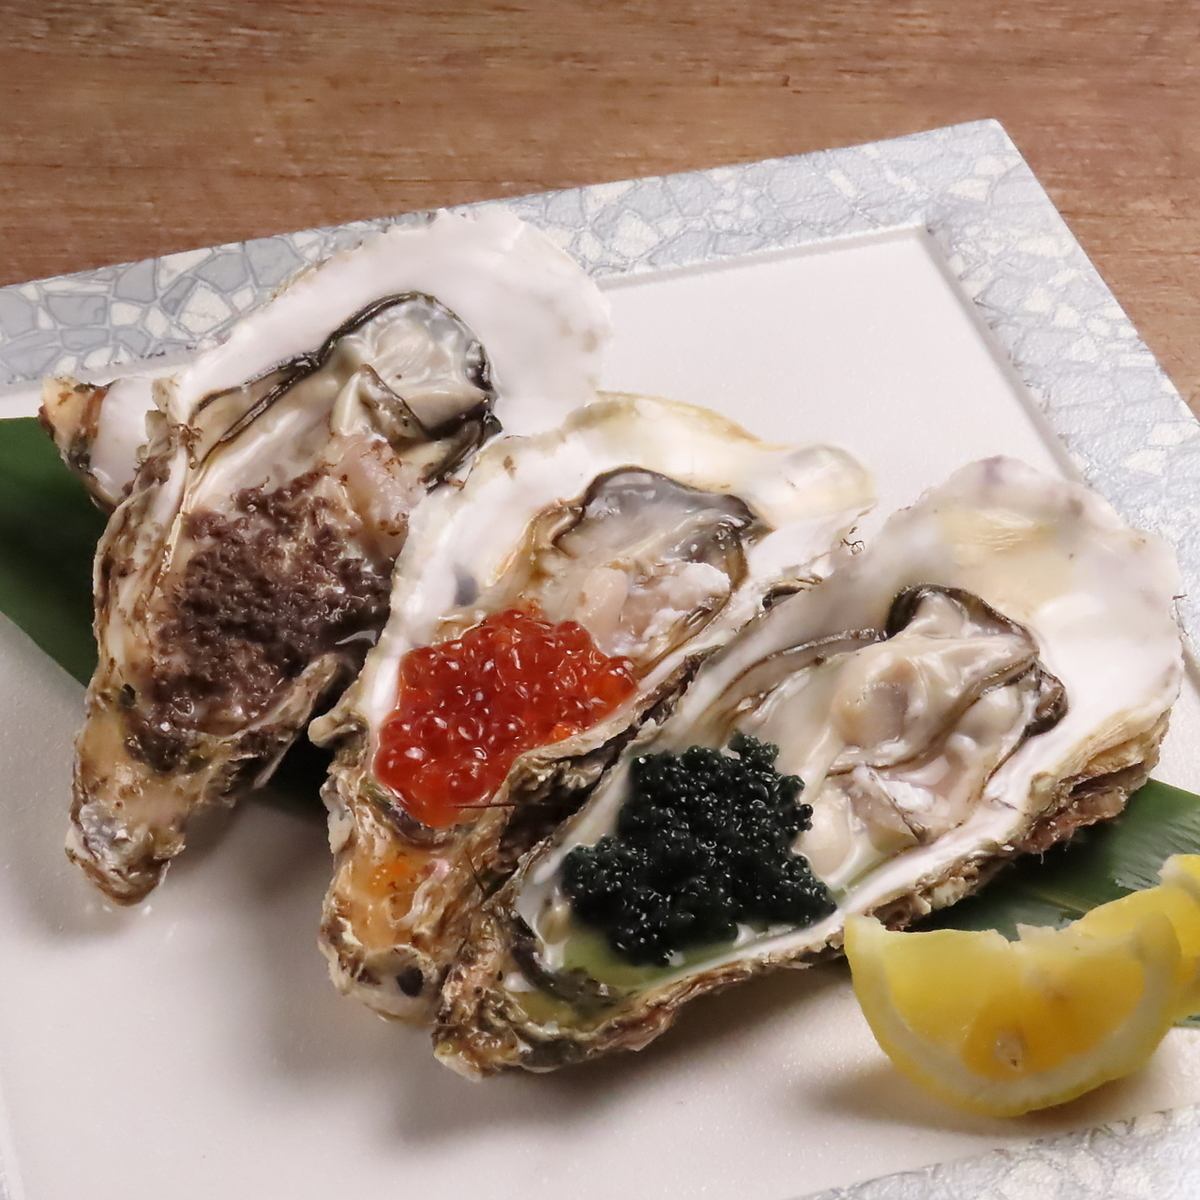 Luxury large oyster festival! Oysters x truffles, salmon roe, caviar